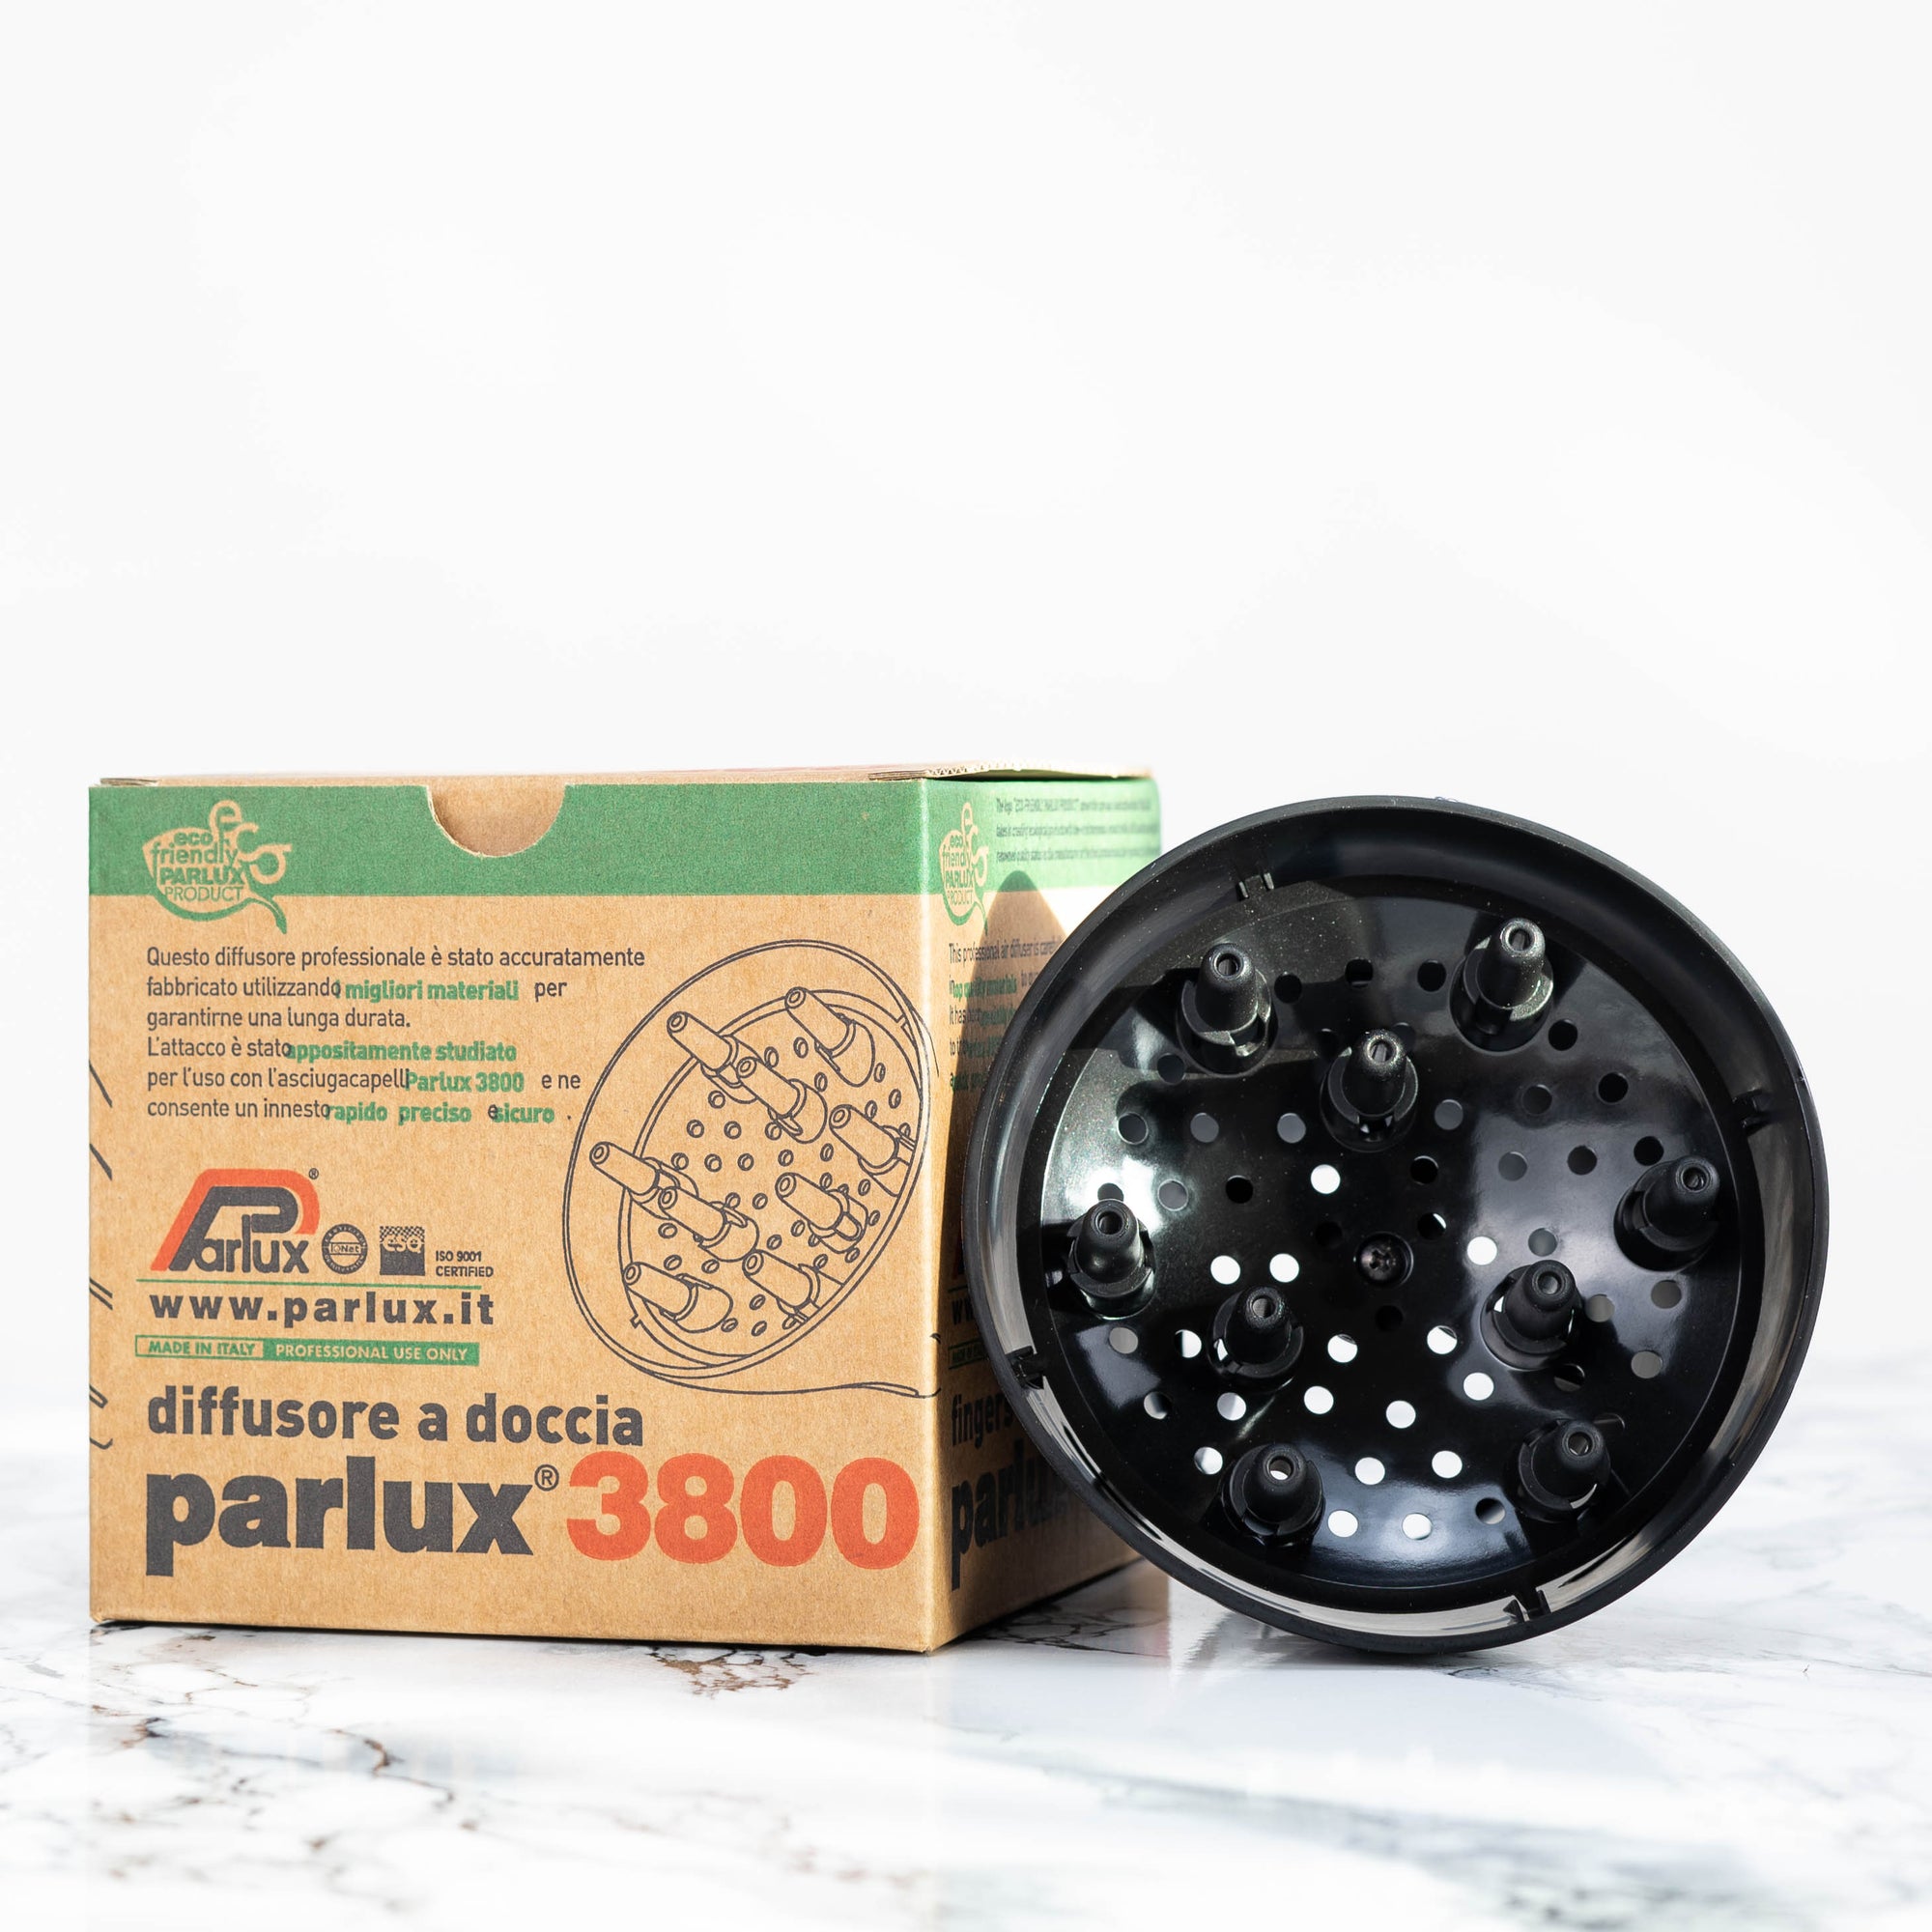 Parlux Difusor 3800